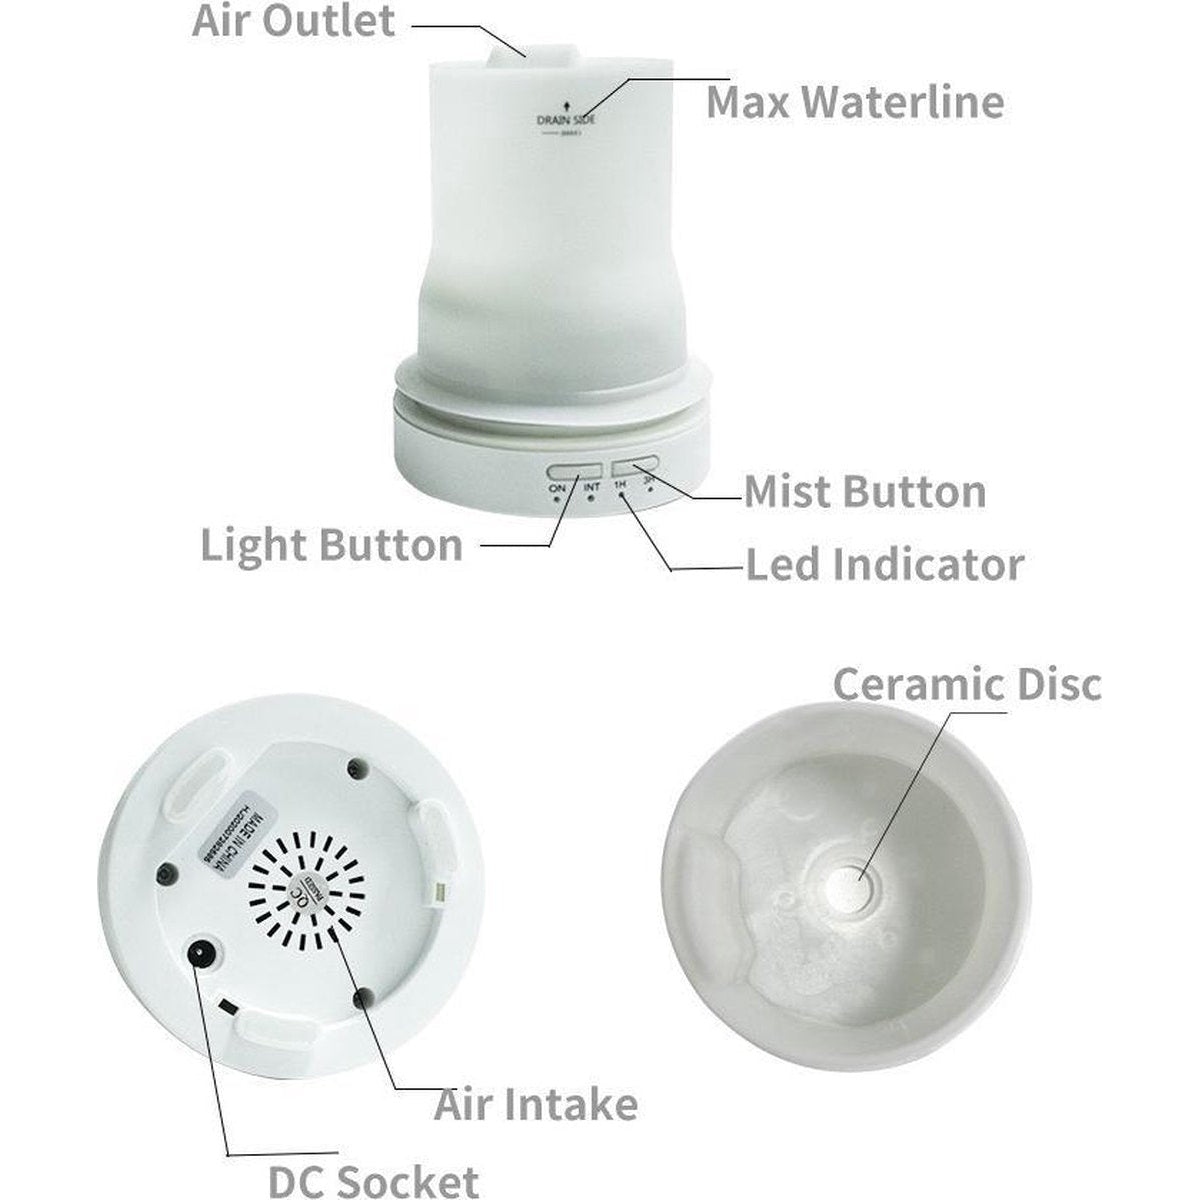 Nixnix - Aroma diffuser Keramiek - Wit - Breathing light - Luchtbevochtiger - Aromatherapie - Humidifier - 100ml